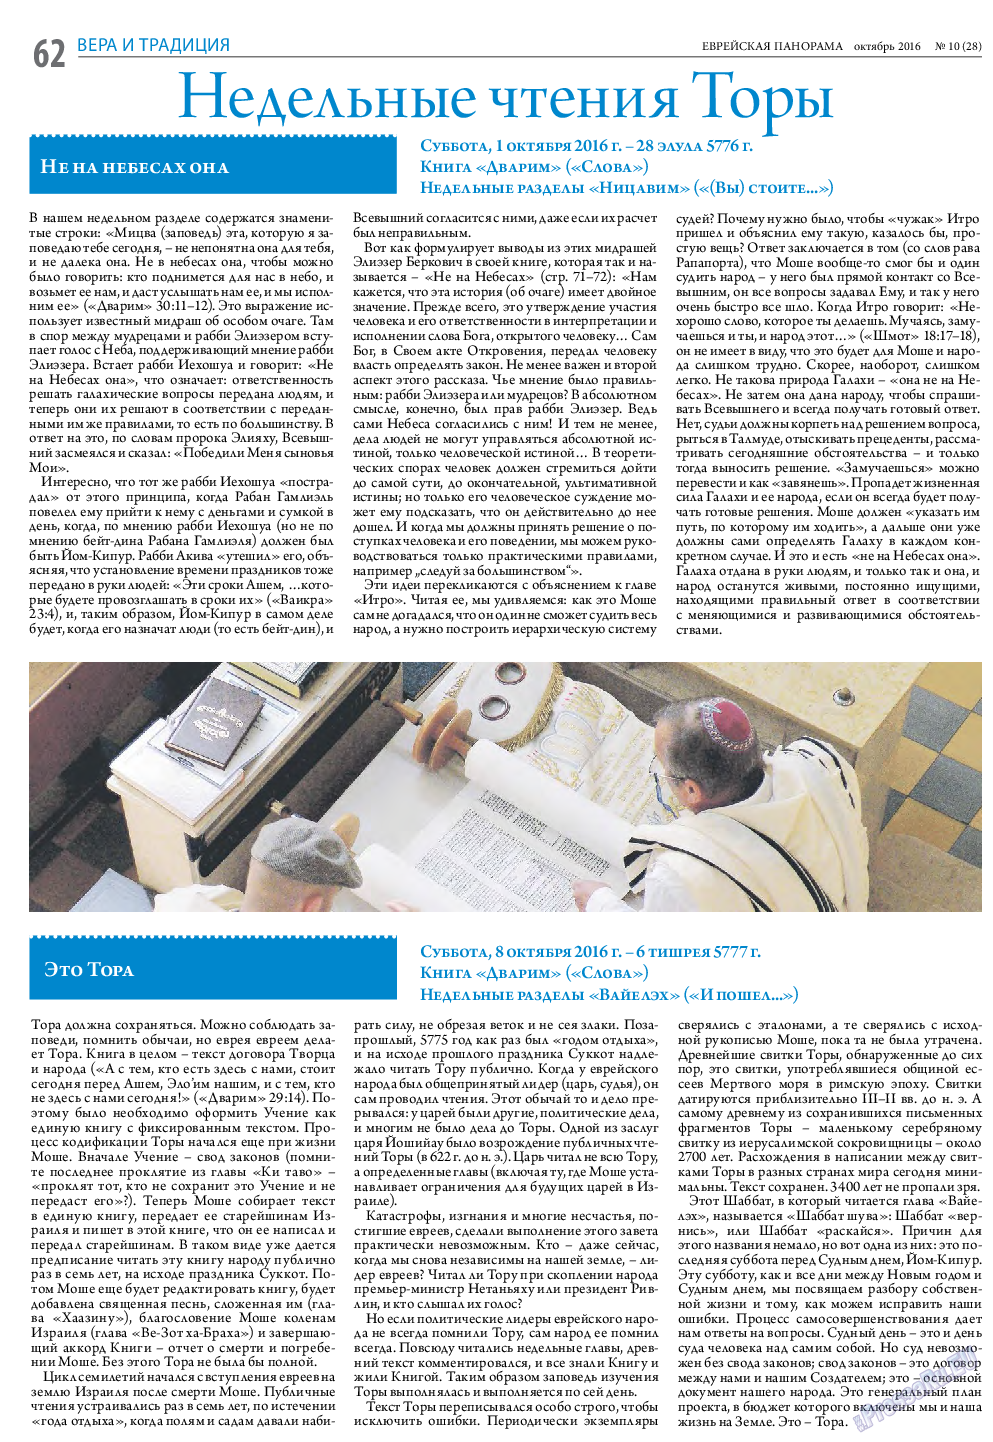 Еврейская панорама, газета. 2016 №10 стр.62